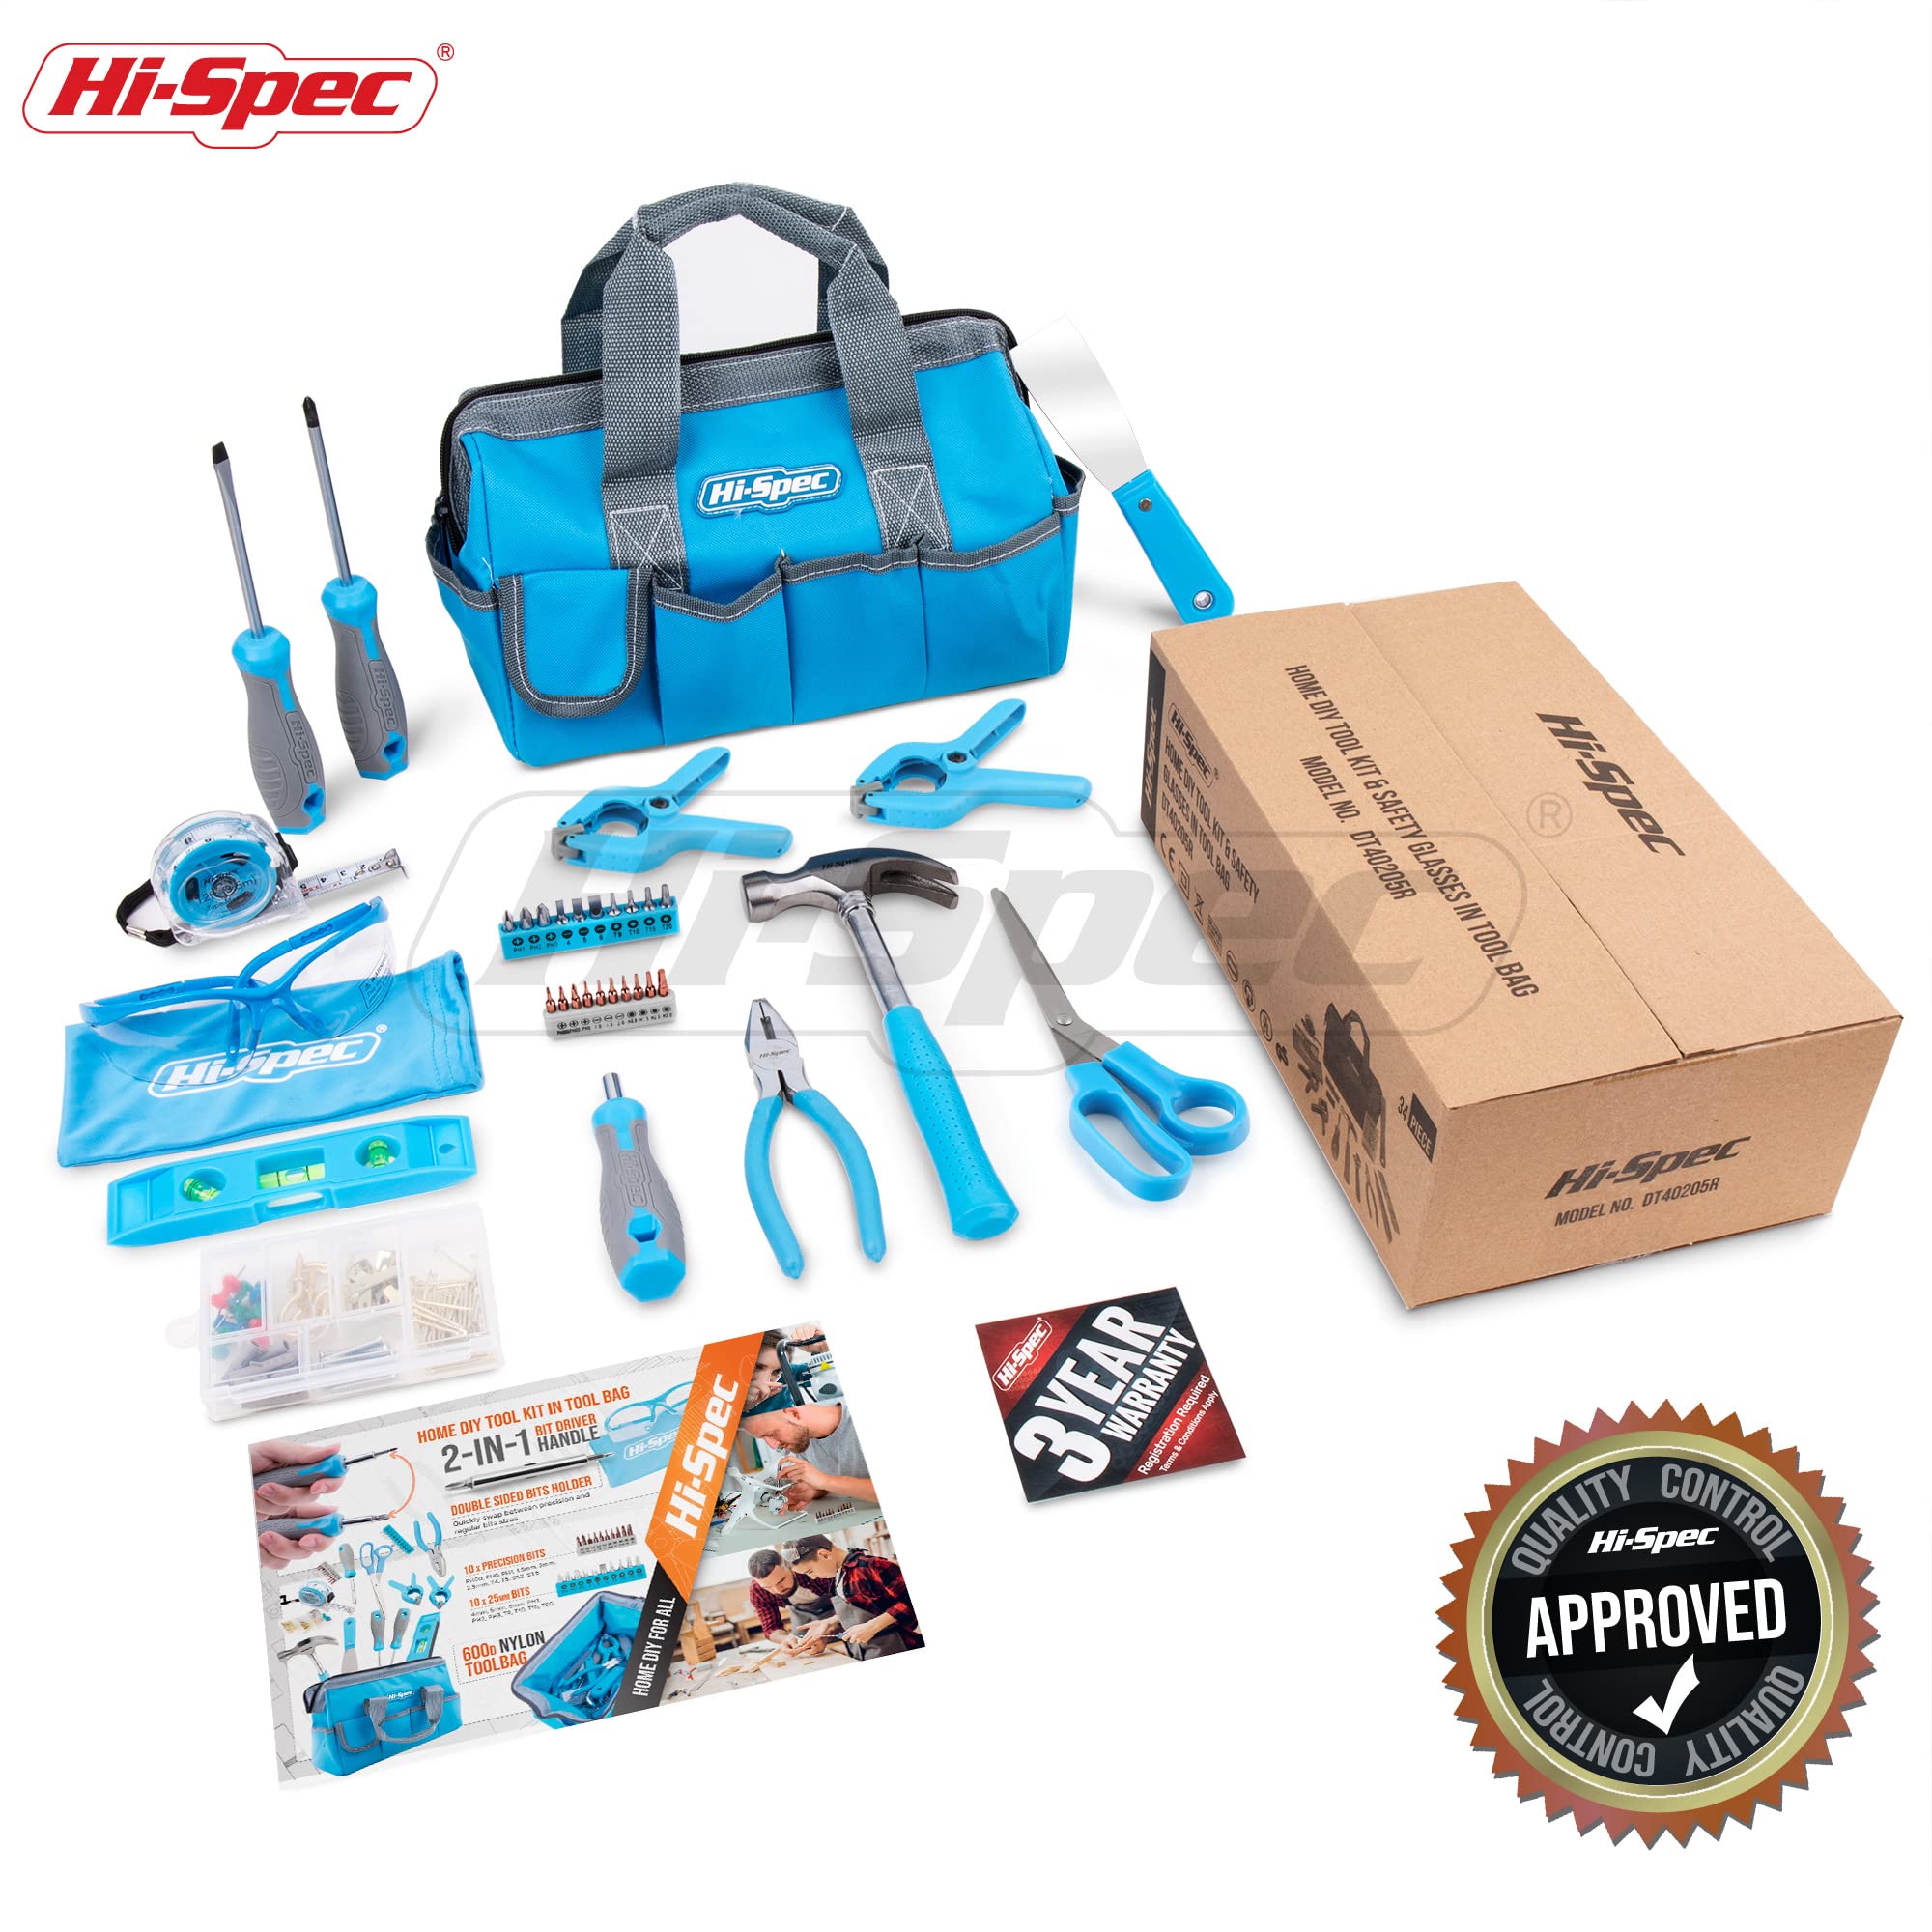 Hi-Spec 85pc Blue Small Home DIY Tool Kit Set Bundle With 12V Electric Battery Drill Driver Kit & Bit Set